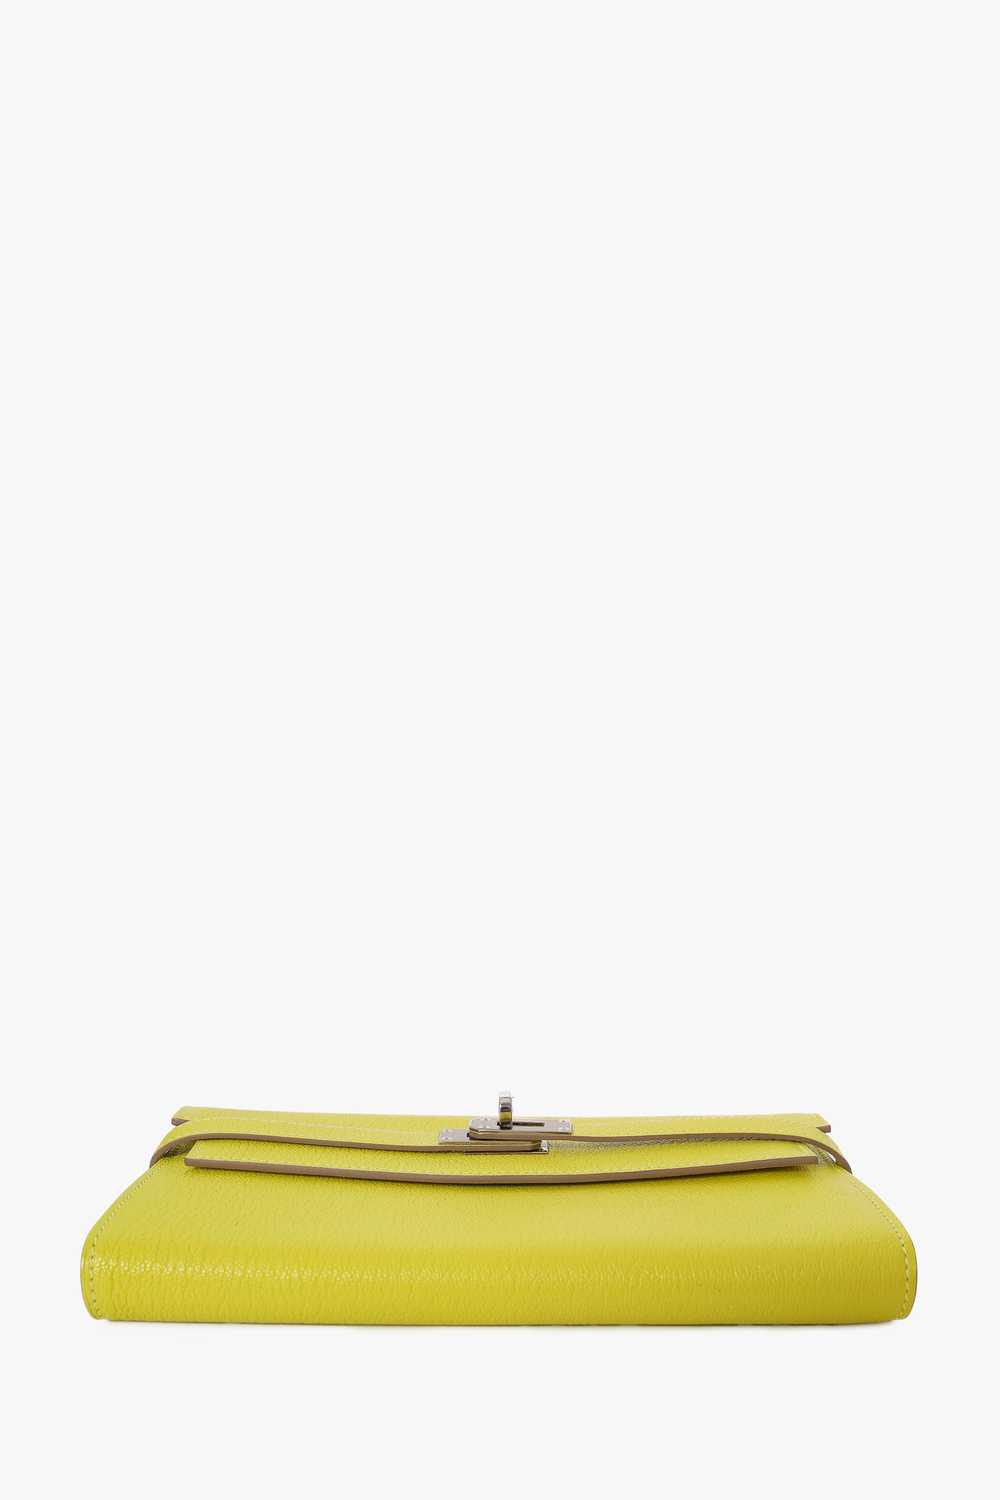 Hermès 2017 Yellow Chevre Leather Kelly Wallet - image 5